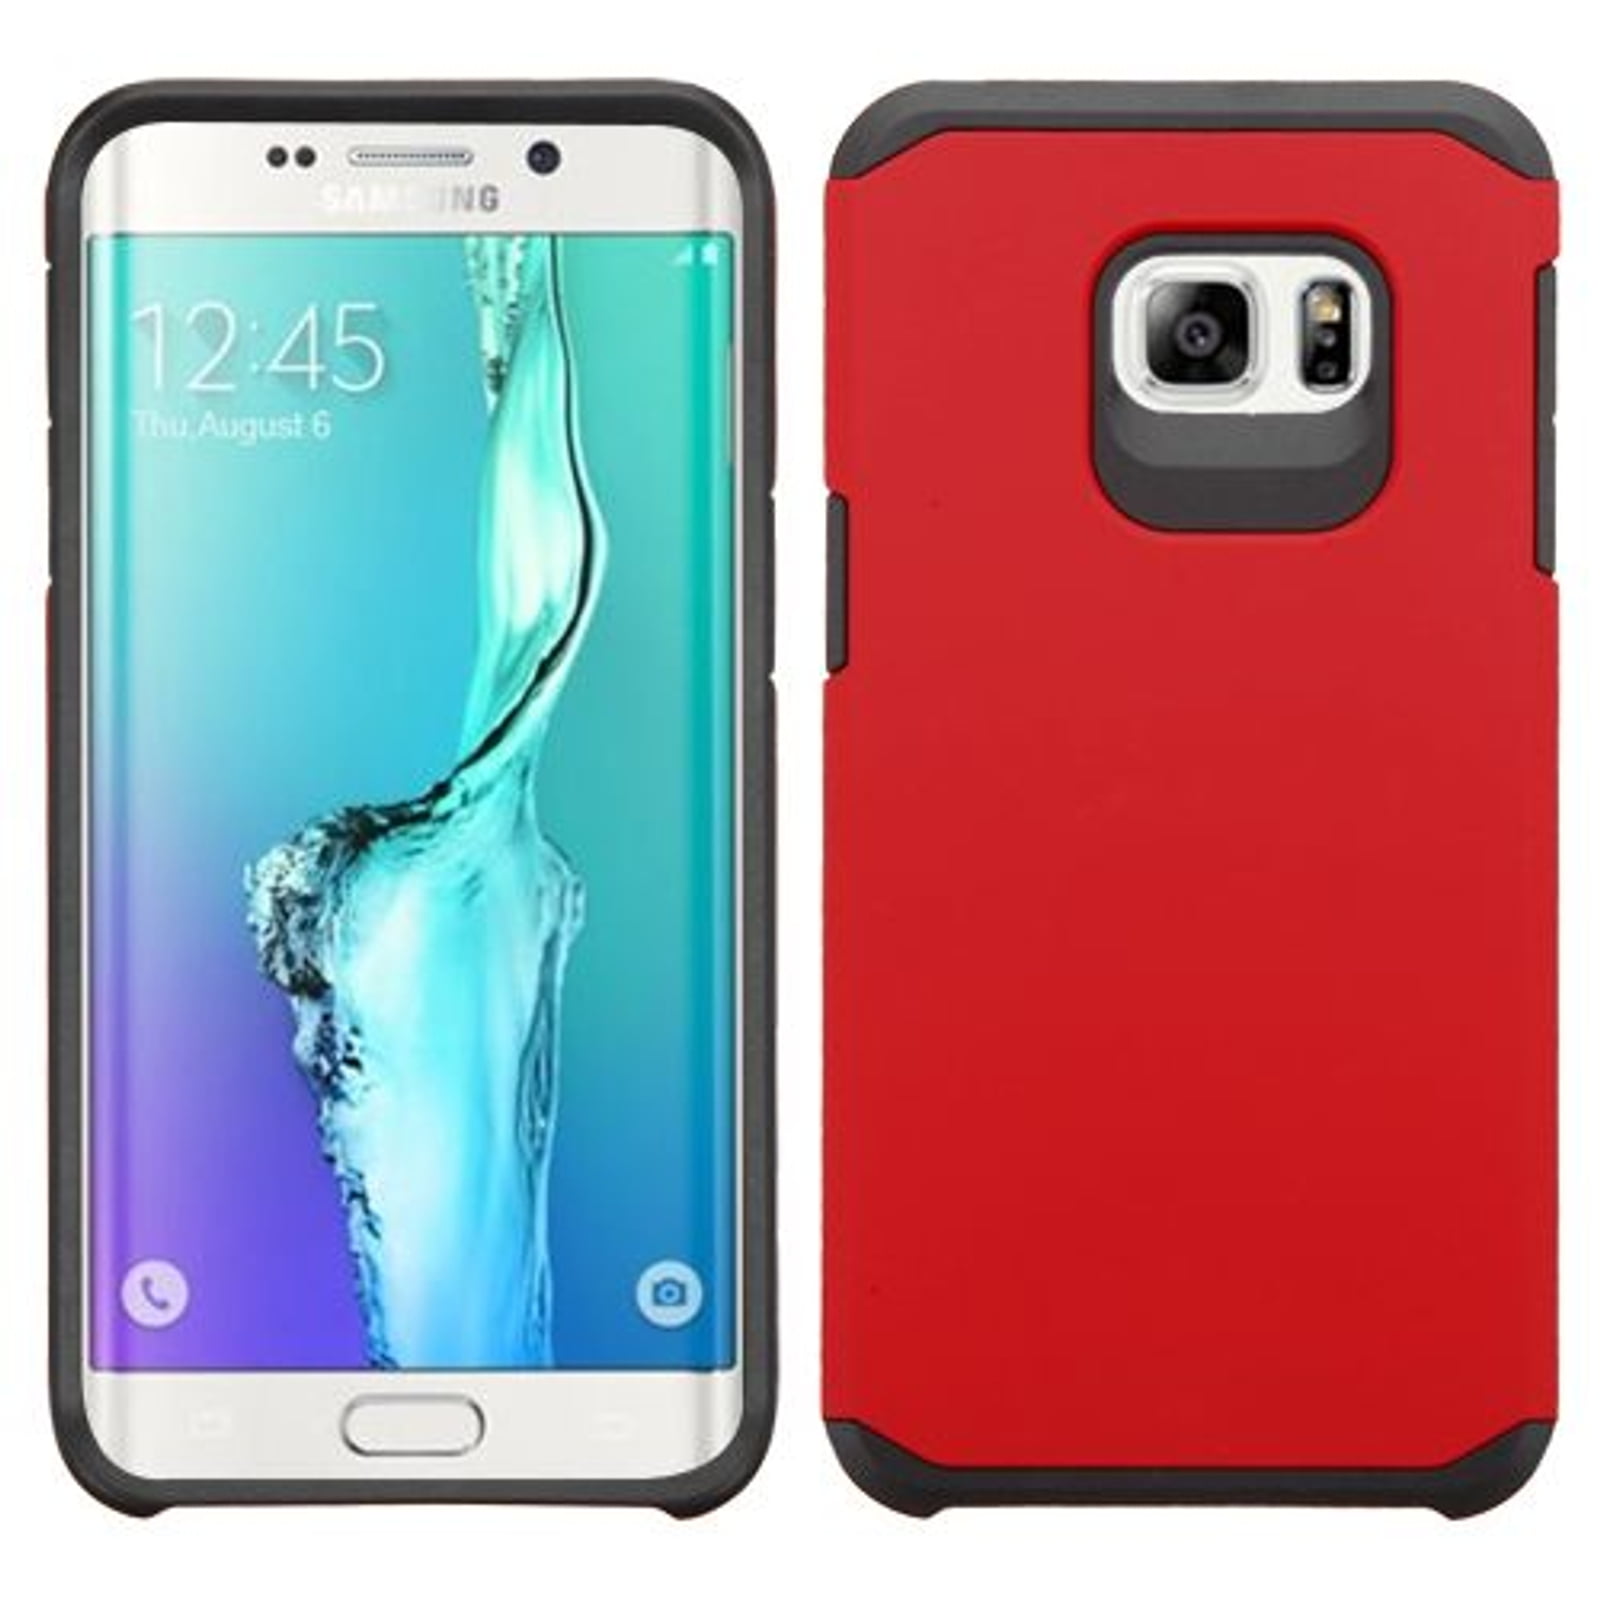 Op tijd Haan Realistisch Insten Hard Hybrid Rugged Shockproof Silicone Case for Samsung Galaxy S6  Edge Plus - Red/Black - Walmart.com